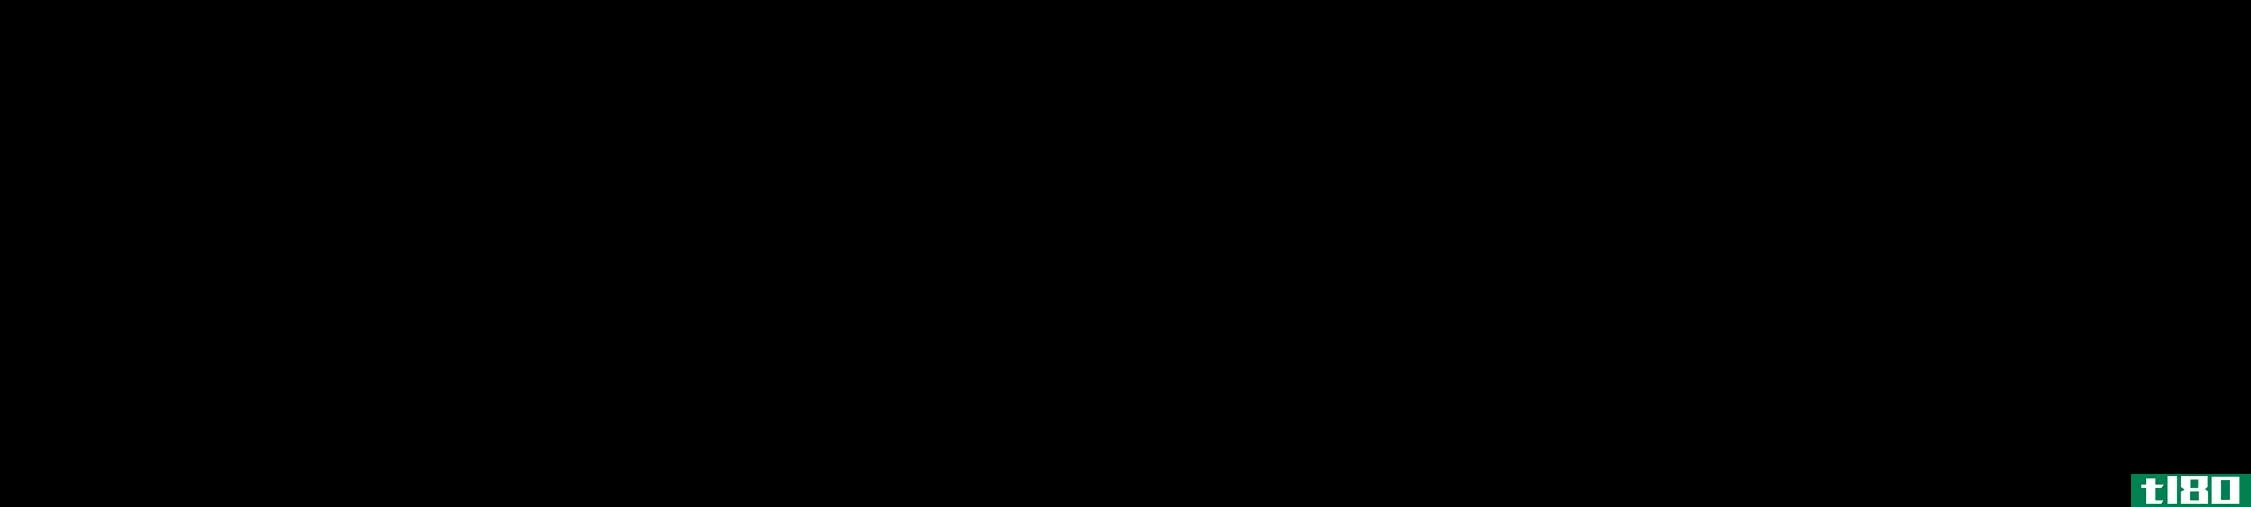 异构化(isomerization)和氢化异构化(hydroisomerization)的区别